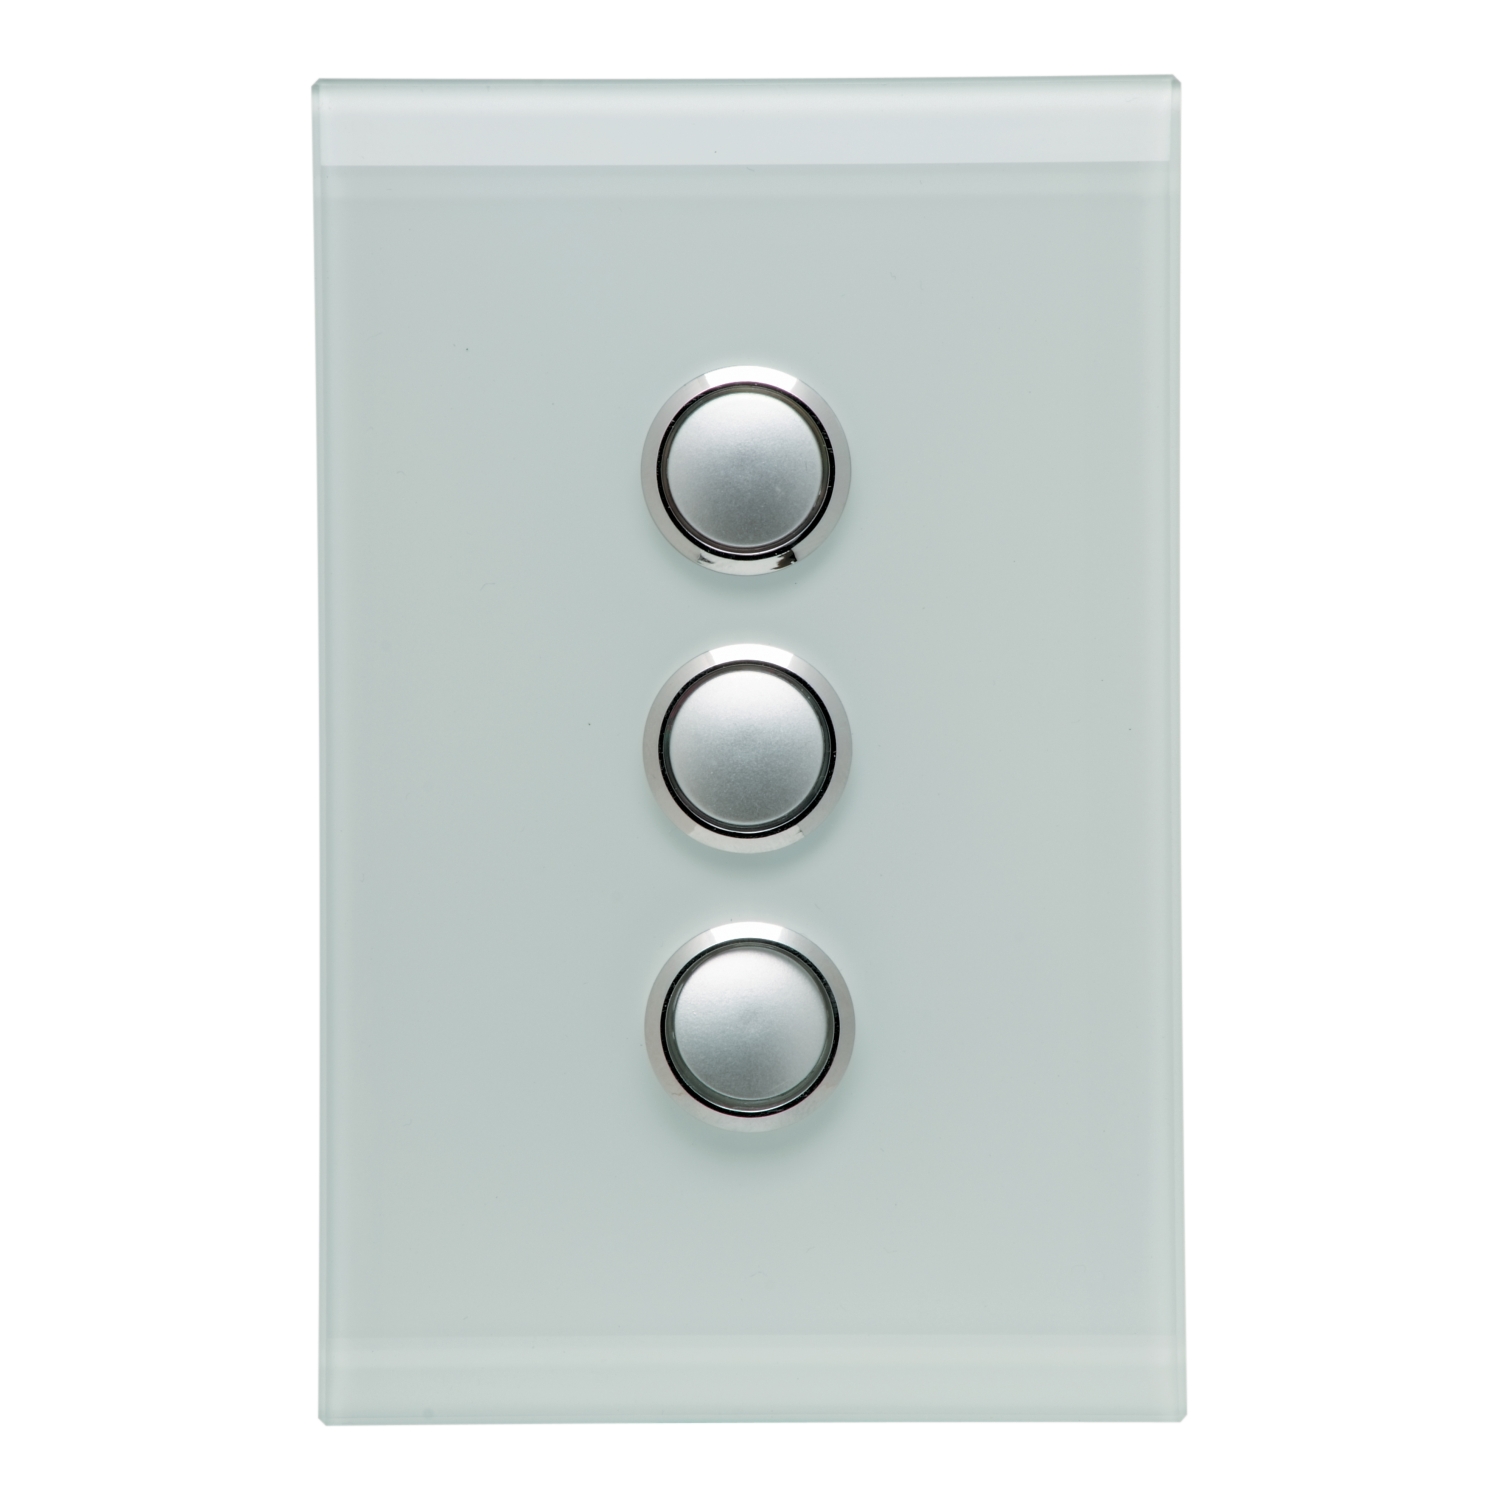 Switch Push-button LED, 3 Gang, 250V, 16AX/20A, LED Indicator